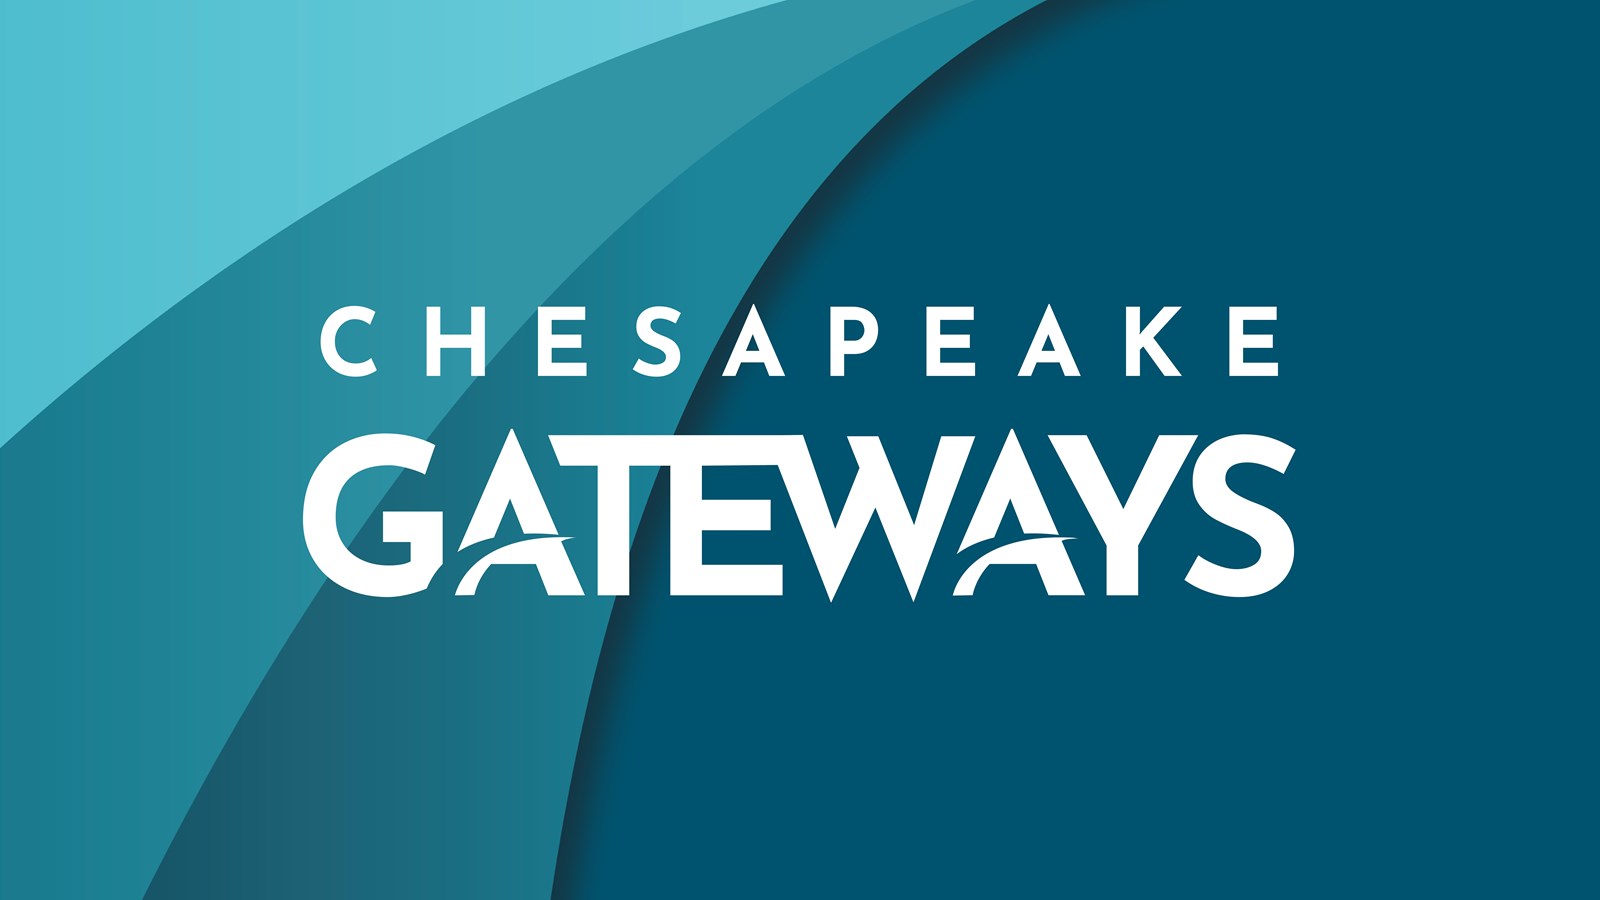 Chesapeake Gateways reads across a blue background.